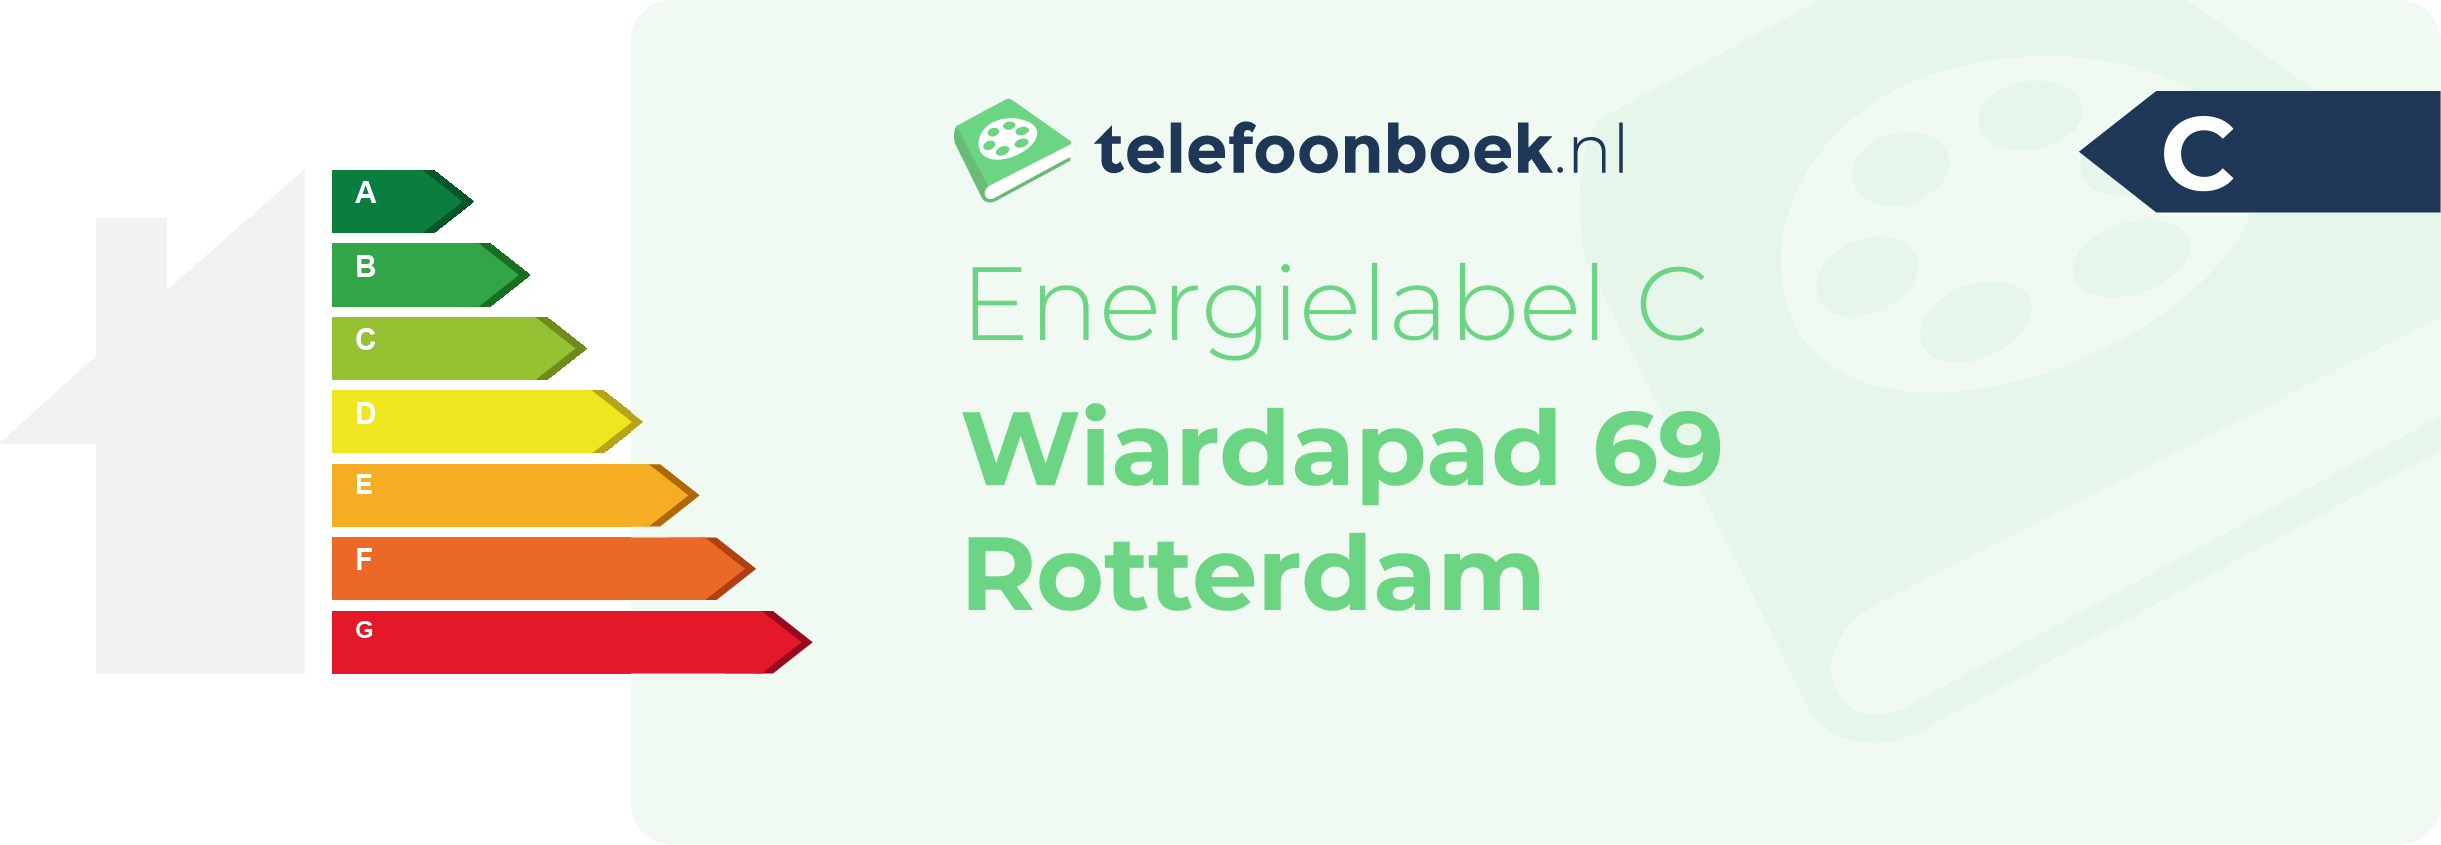 Energielabel Wiardapad 69 Rotterdam